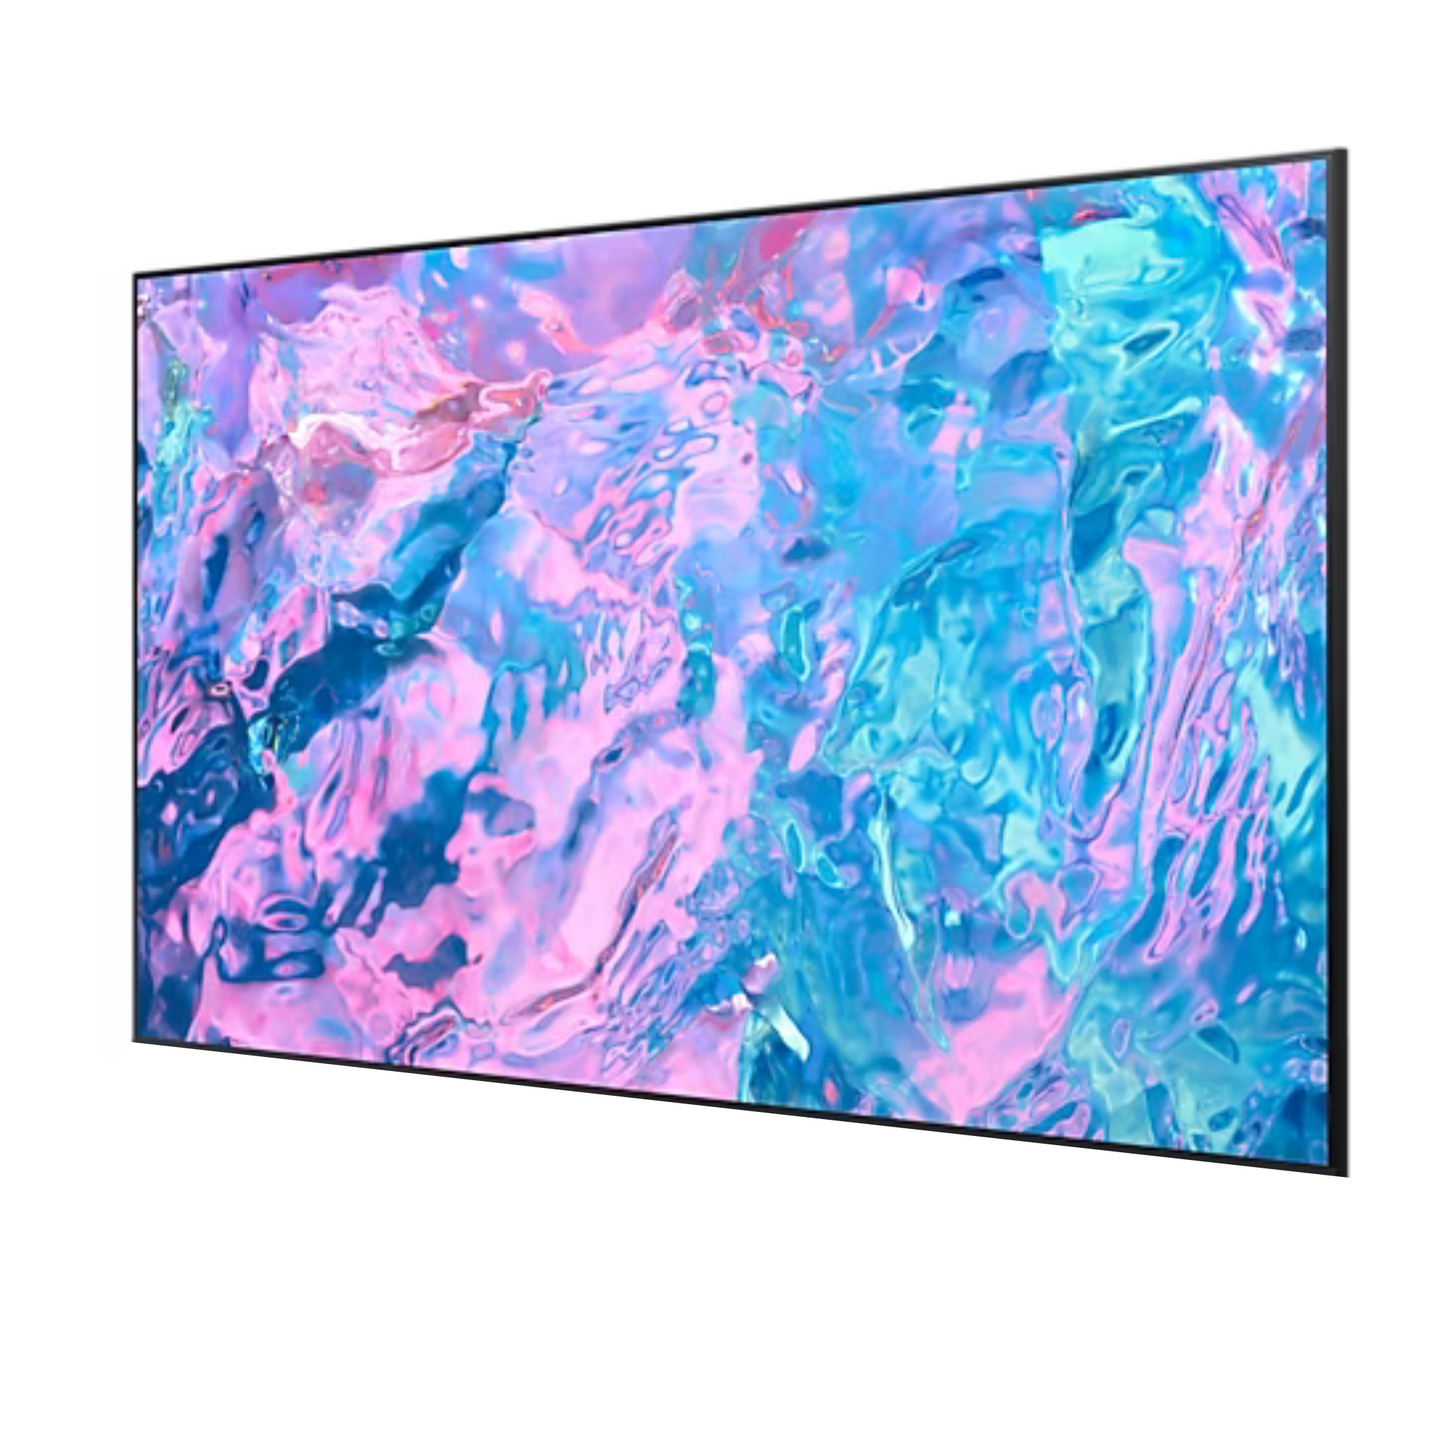 Samsung 75 inch Smart TV - 4K, 75RU7000